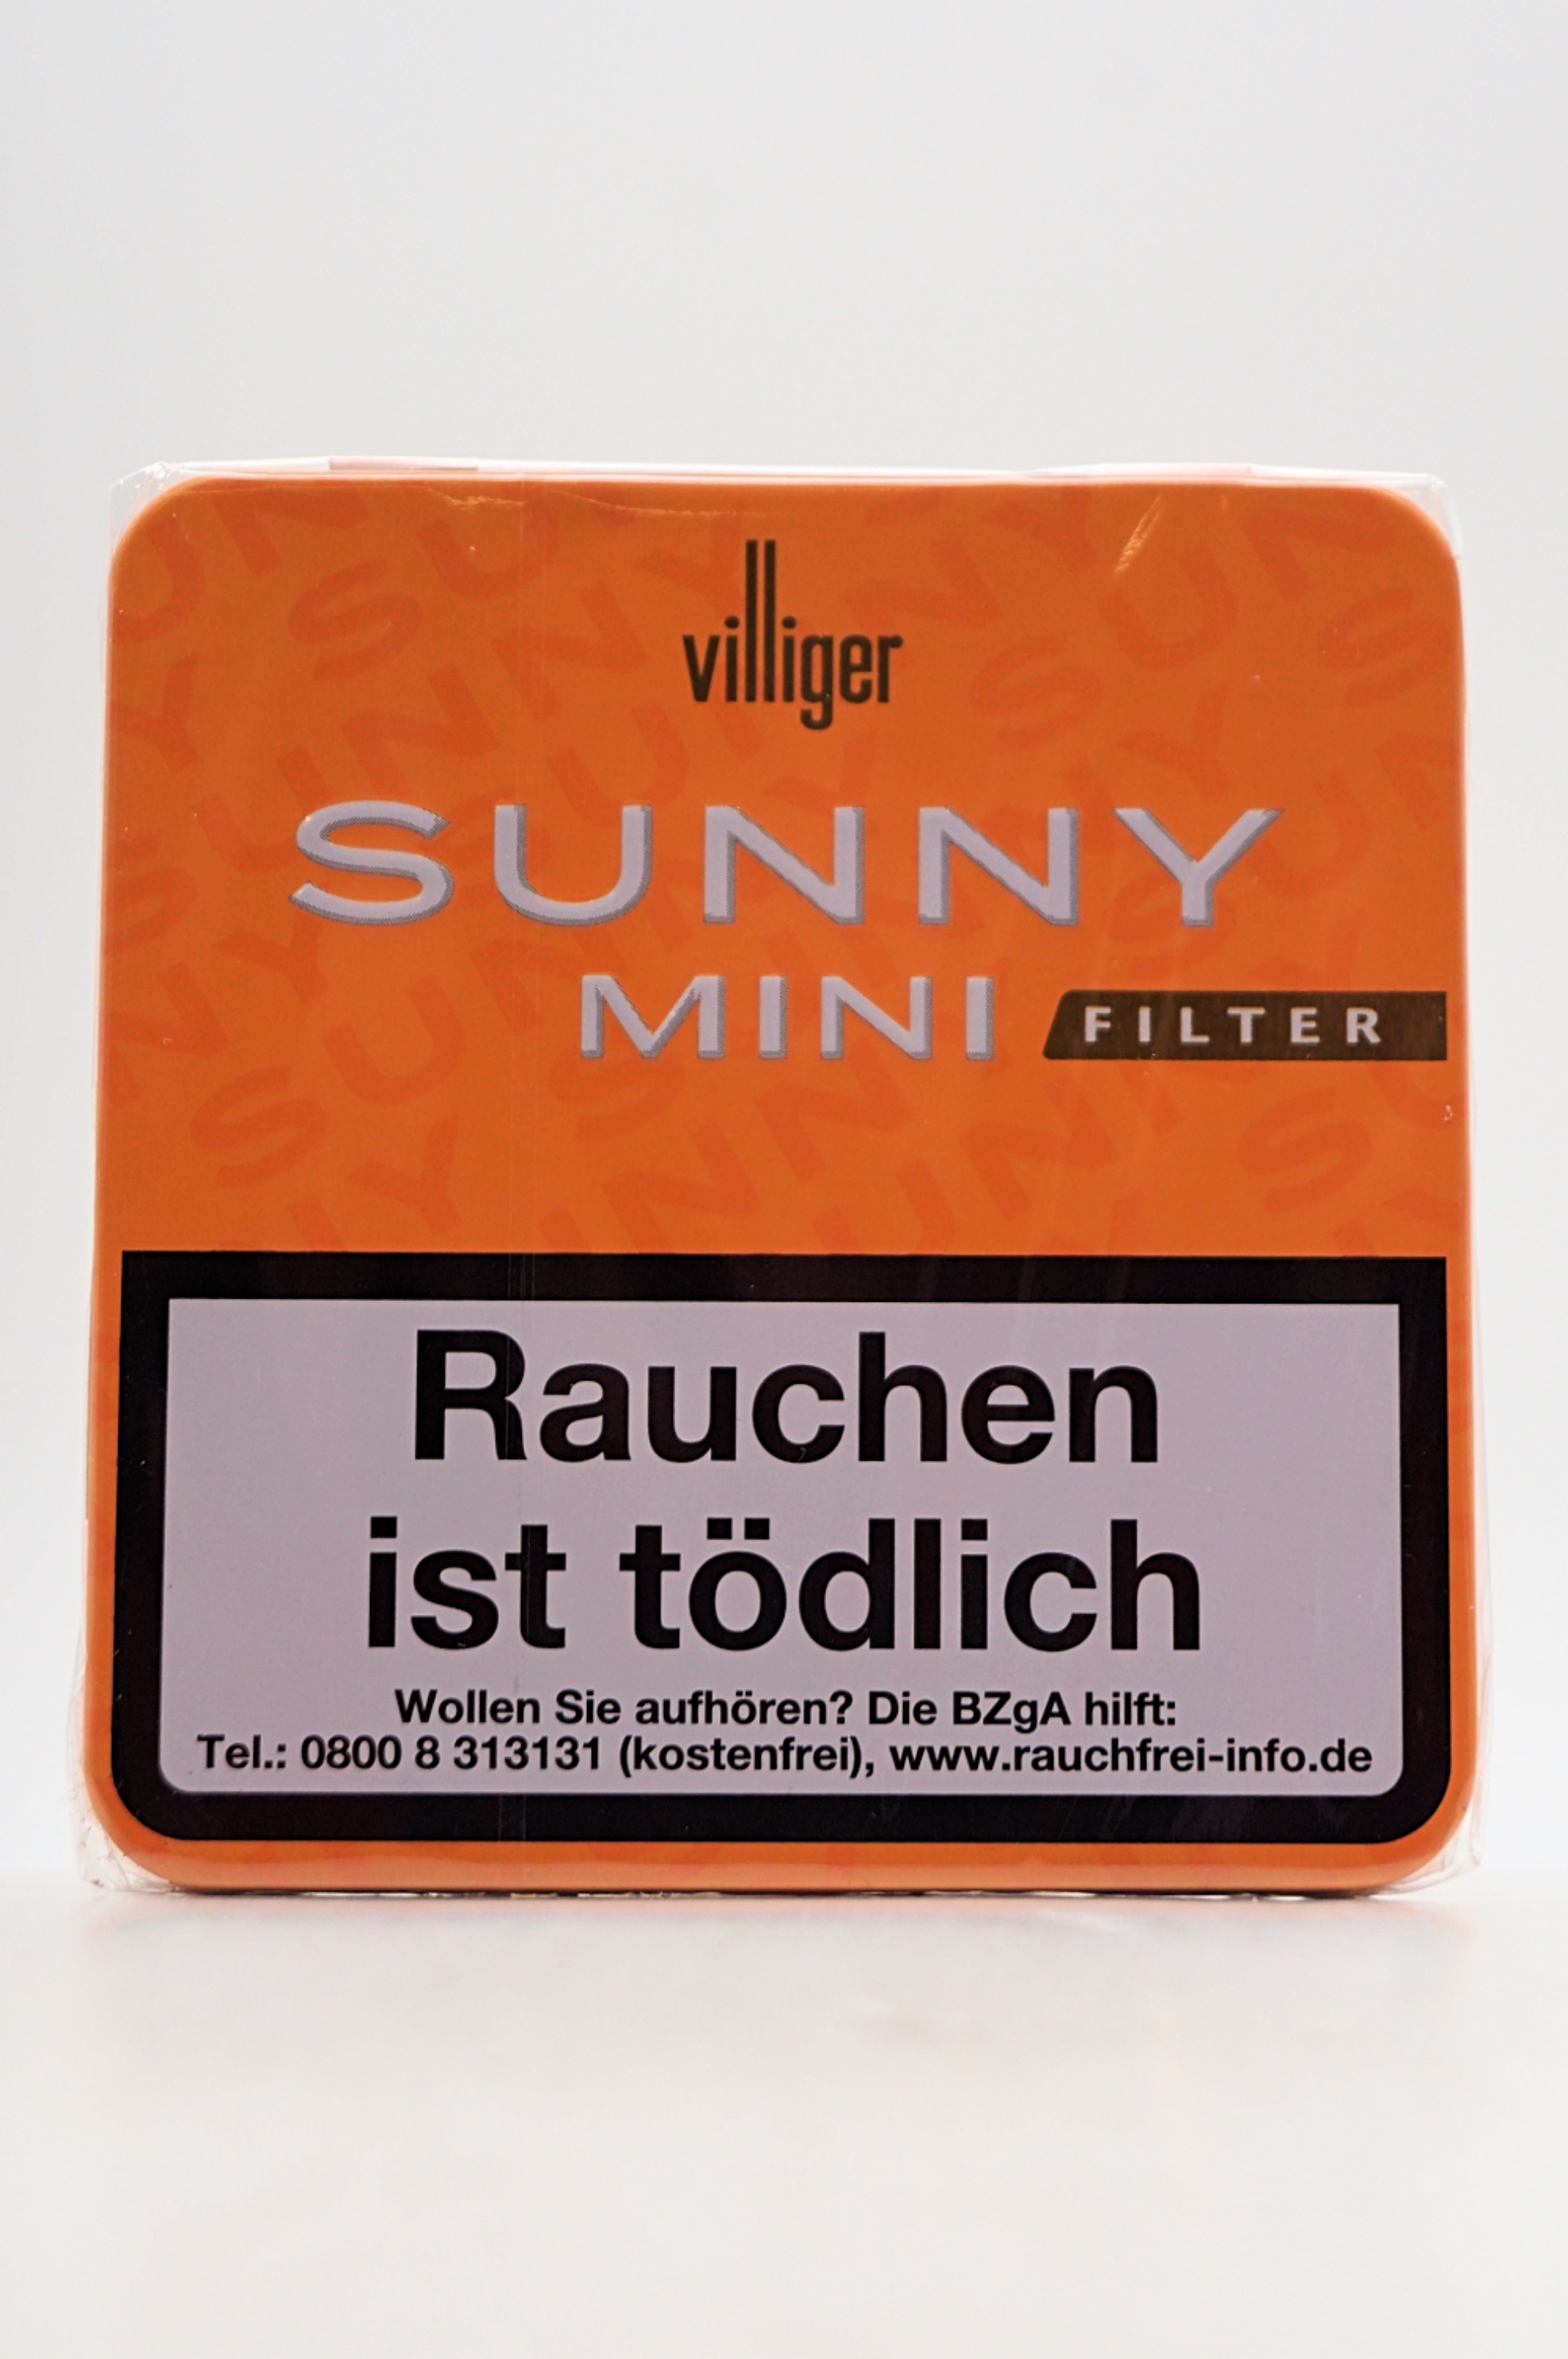 Sunny Mini Filter